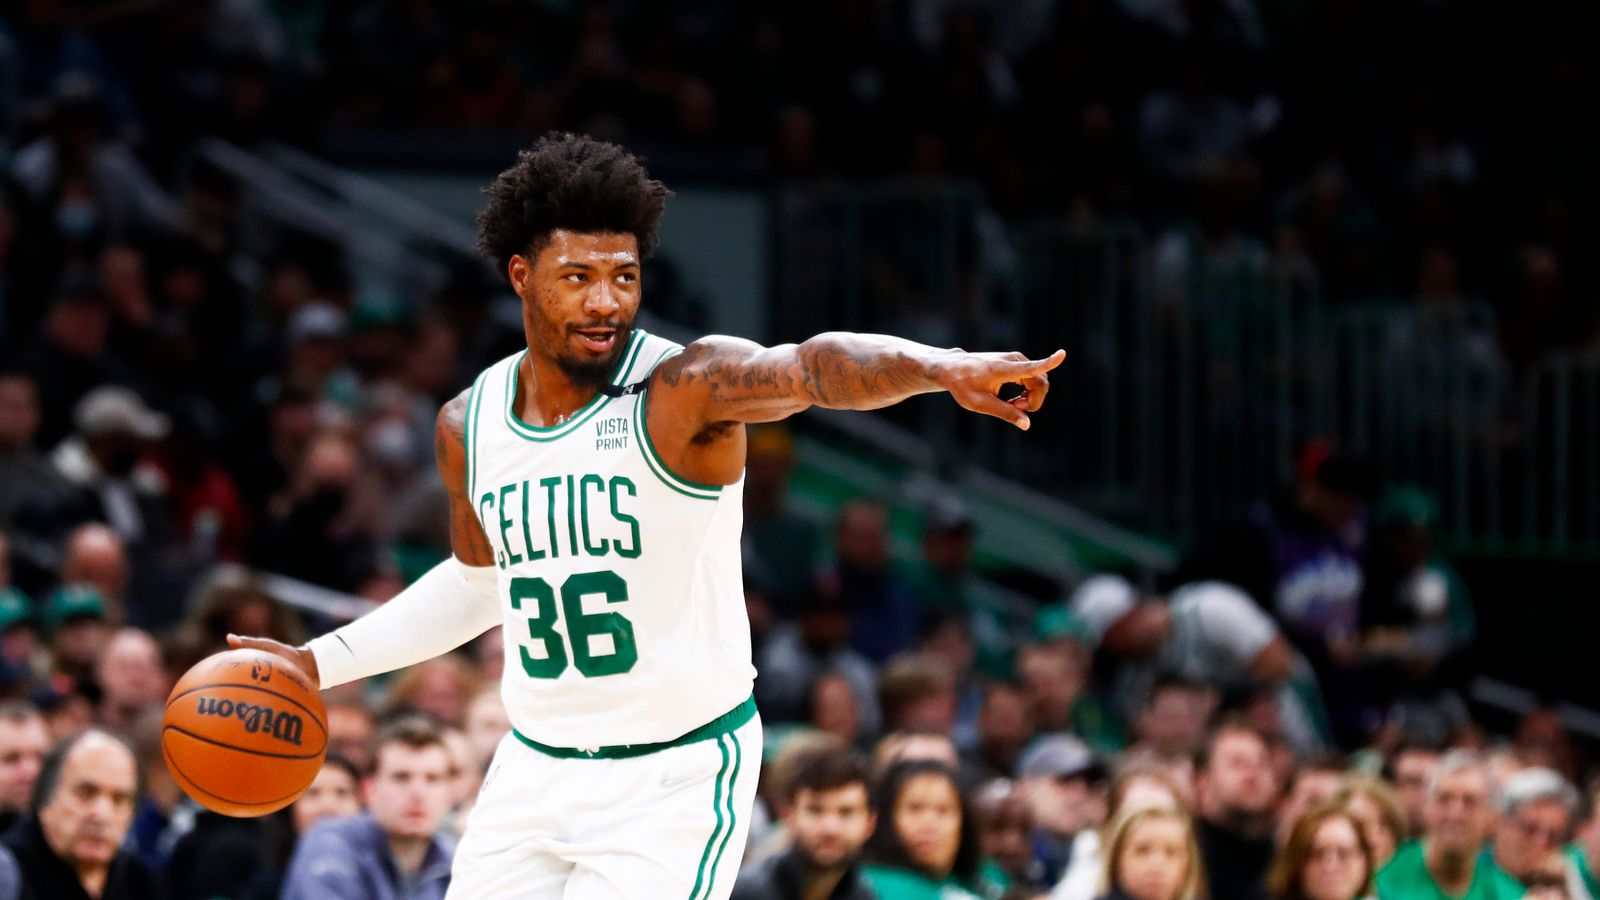 Report: OKC Thunder center Steven Adams is on the Celtics' radar